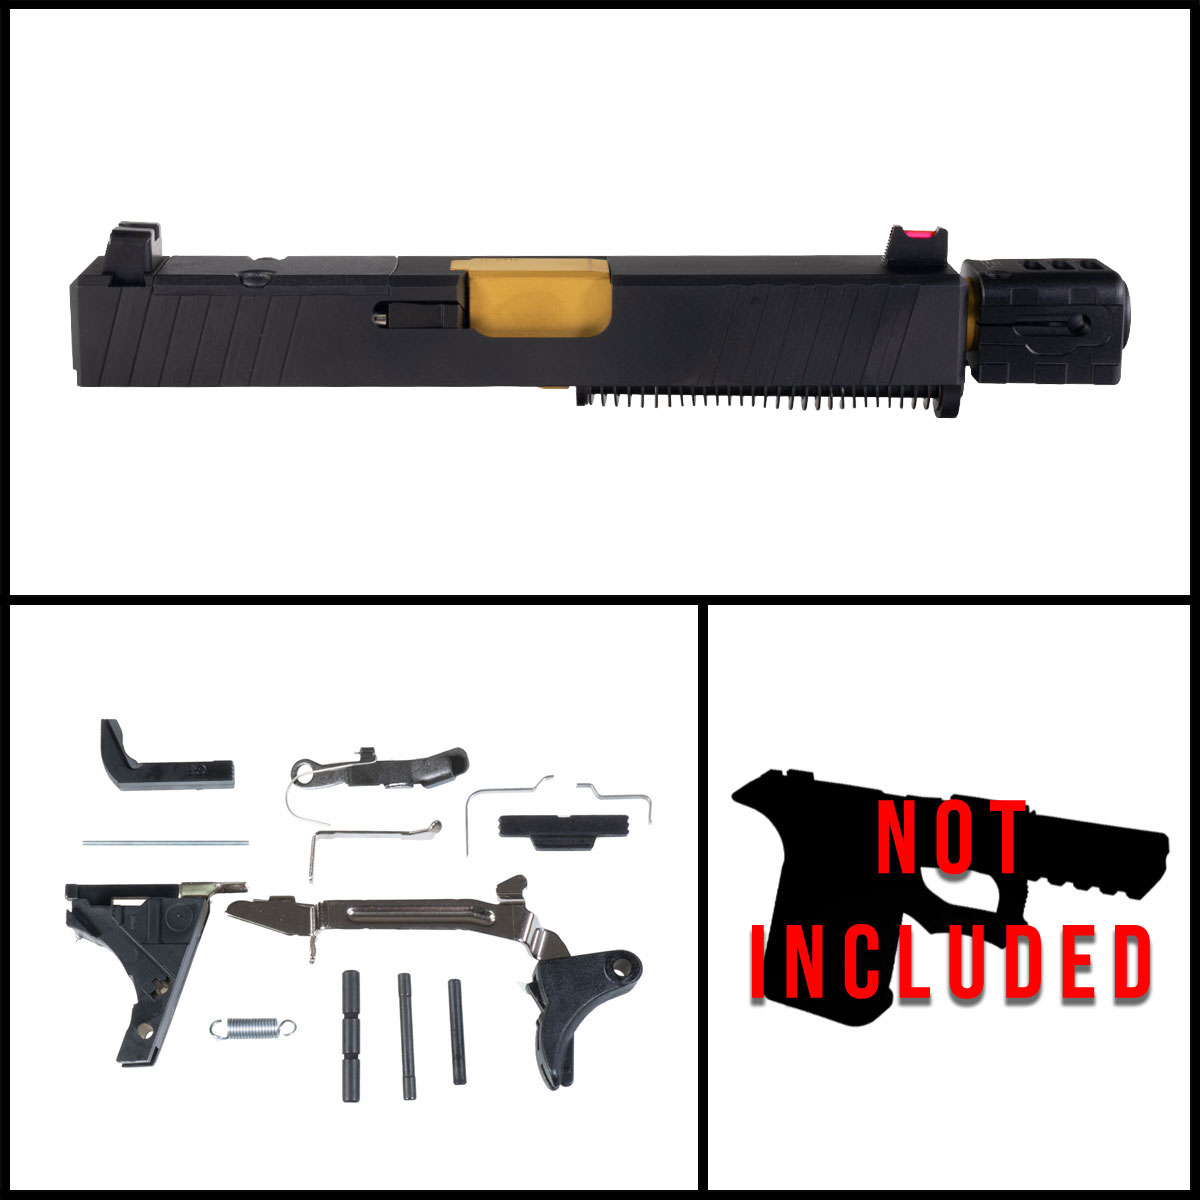 DDS 'Pum w/ Sylvan Arms Compensator' 9mm Full Pistol Build Kit (Everything Minus Frame) - Glock 19 Gen 1-3 Compatible